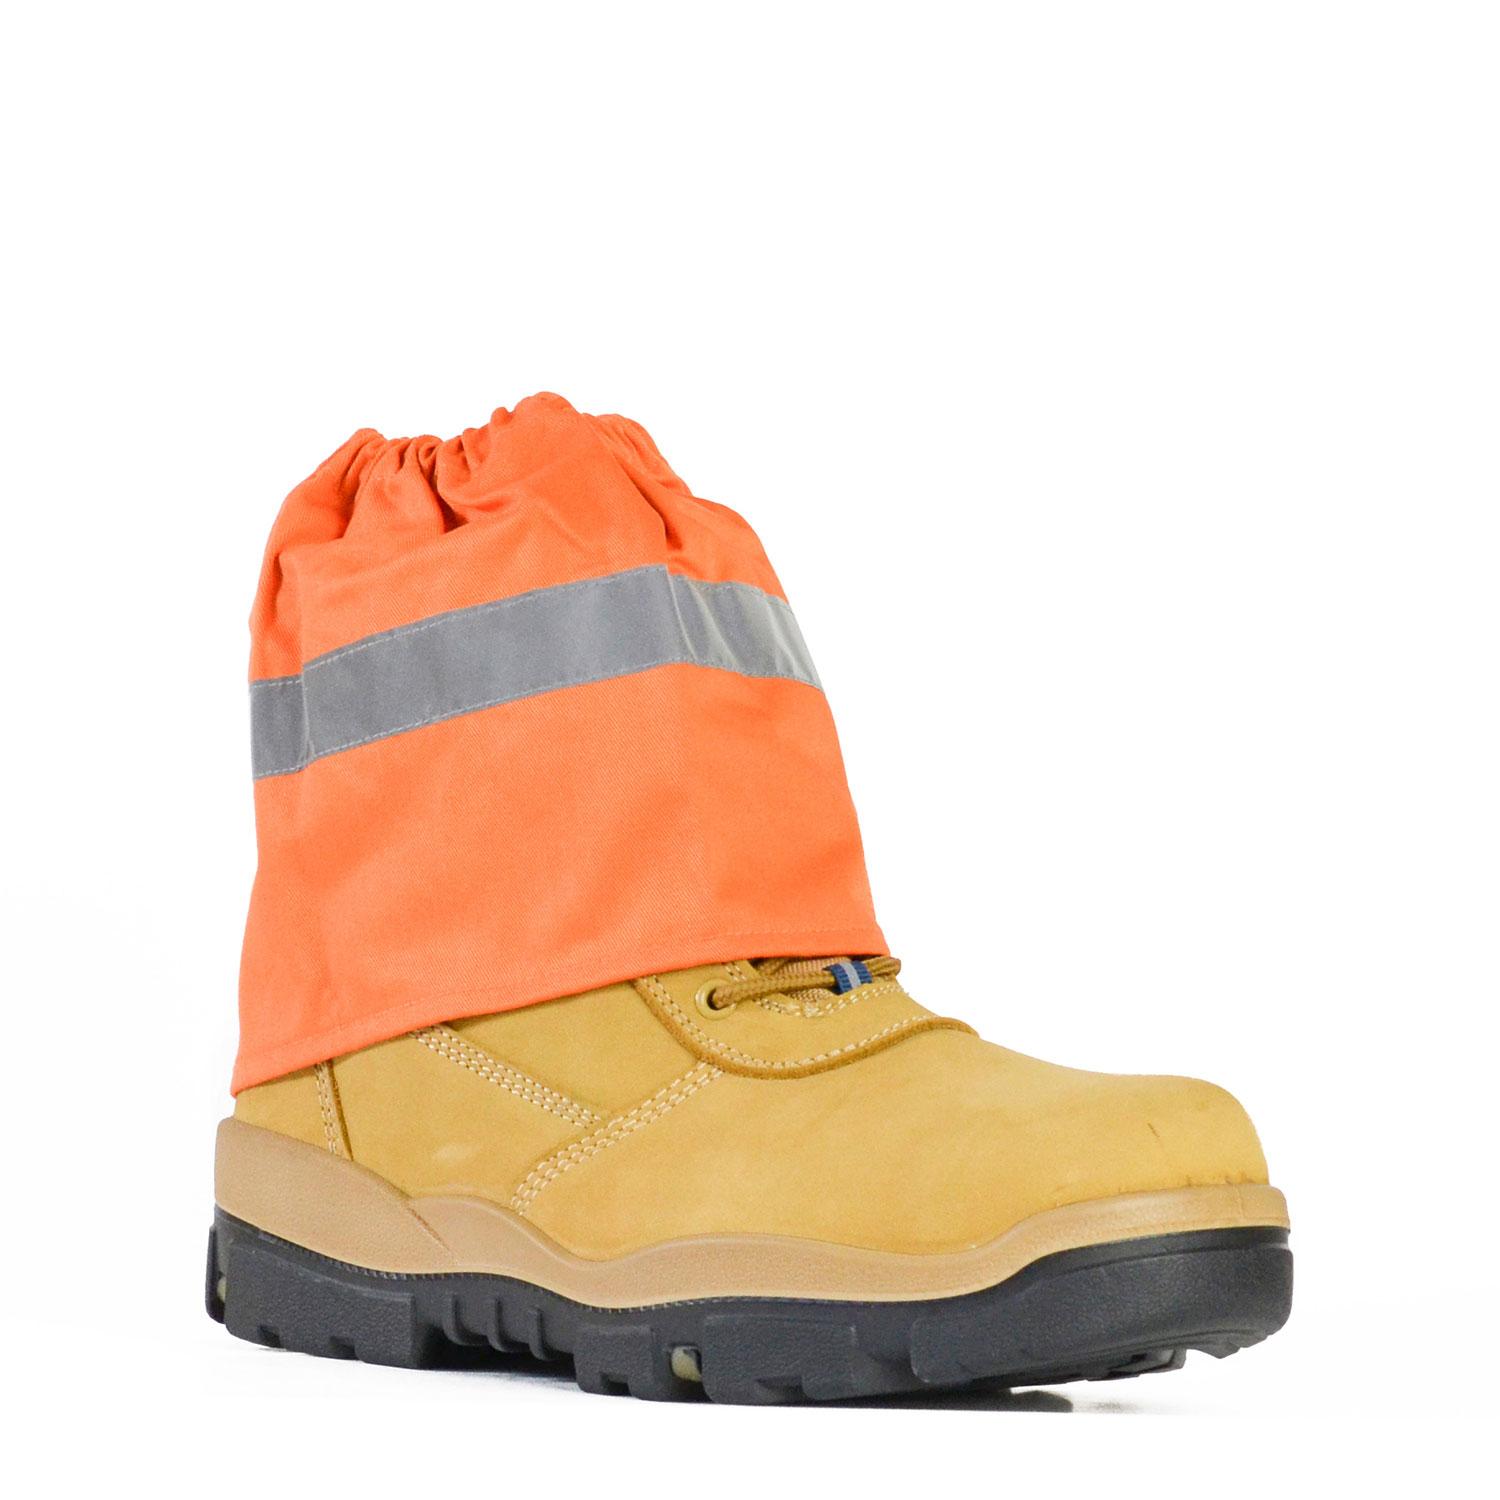 Bata Overboot - Hi-Vis Orange-Bata Industrials Footwear